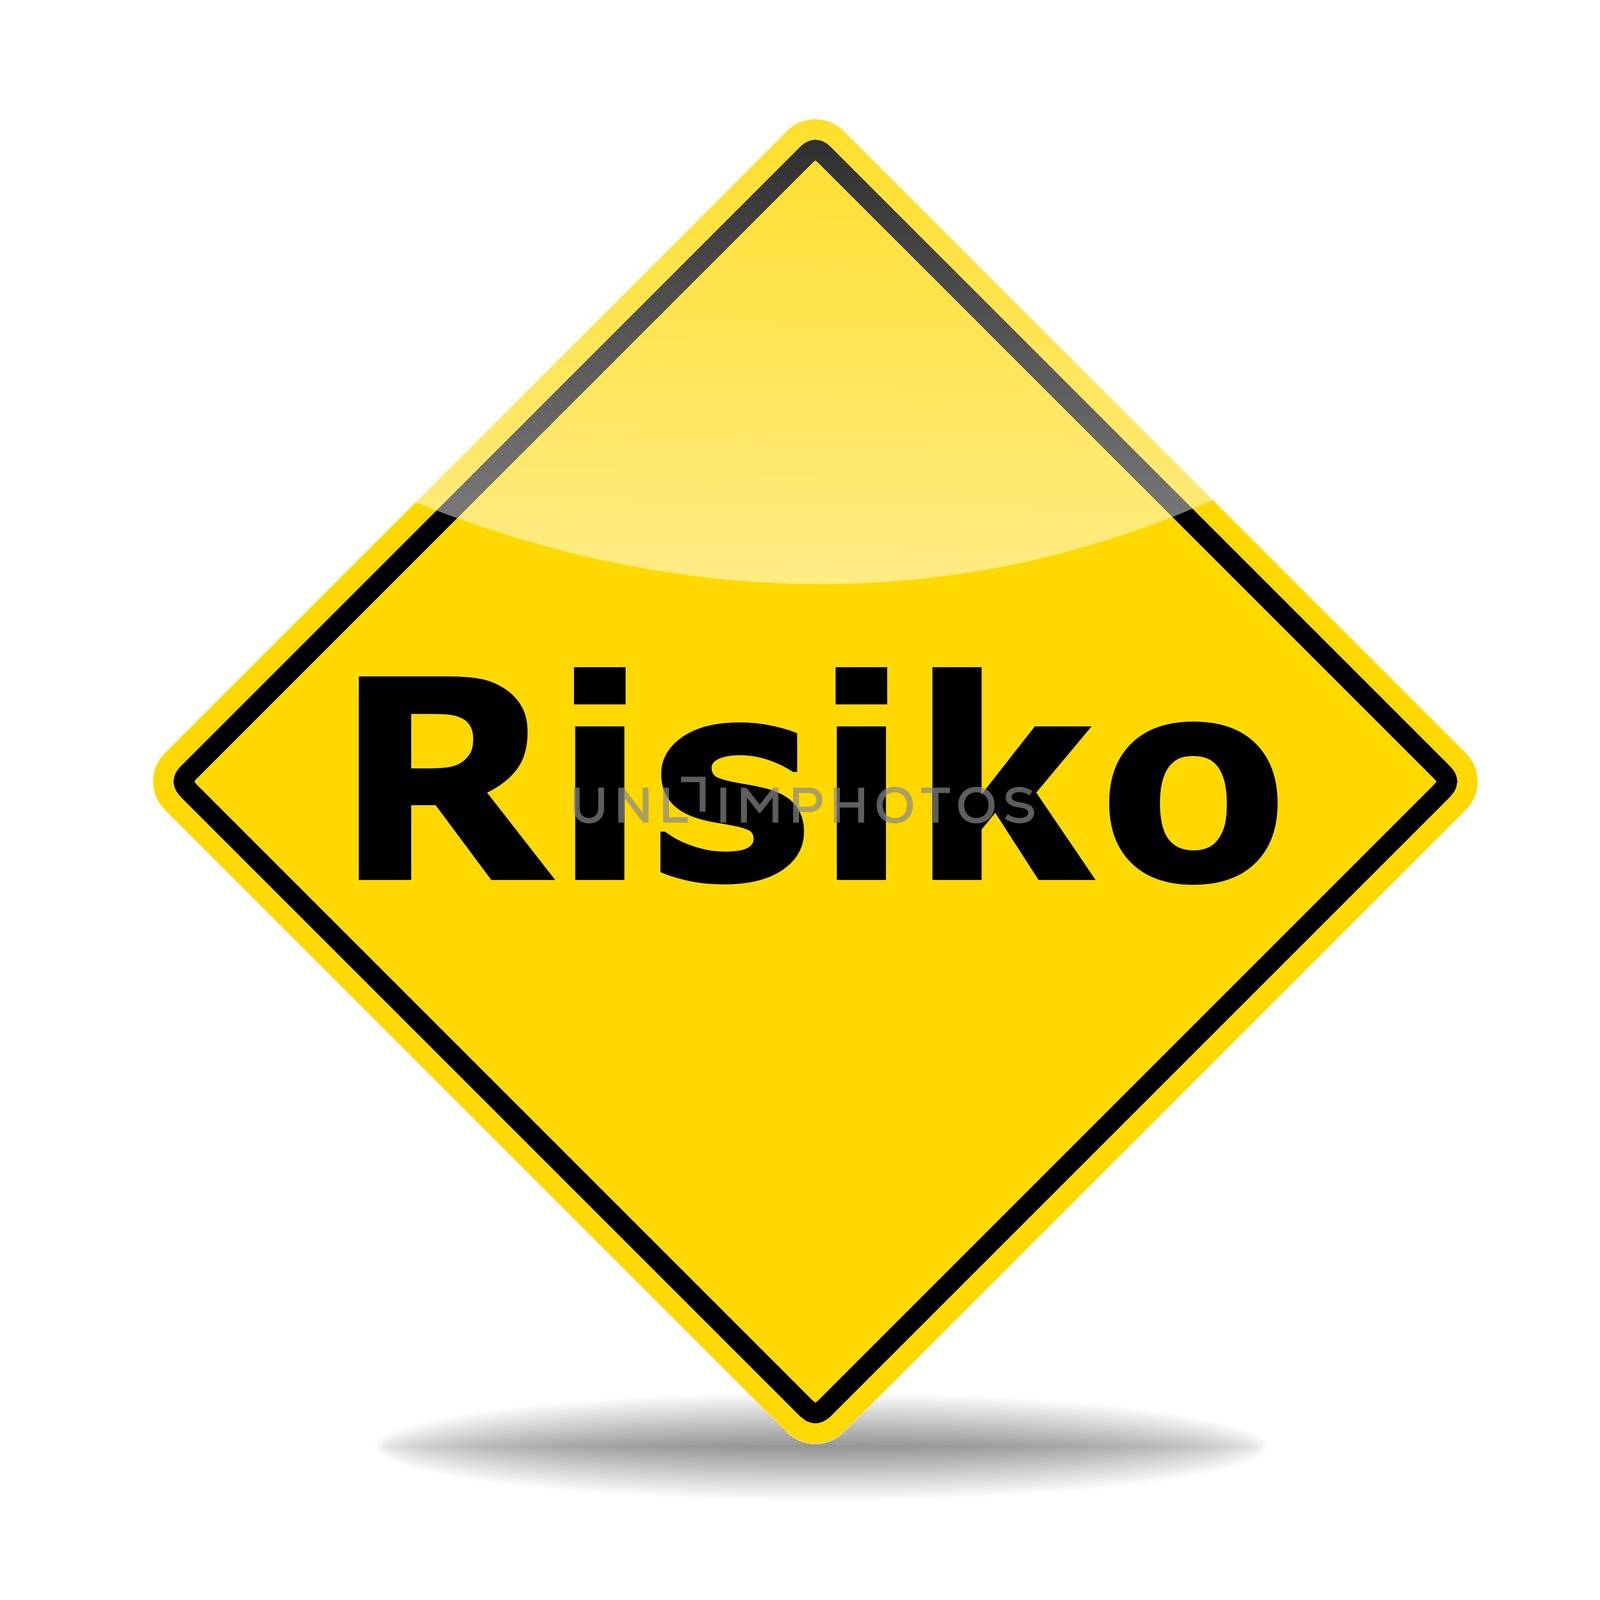 risk concept by gunnar3000